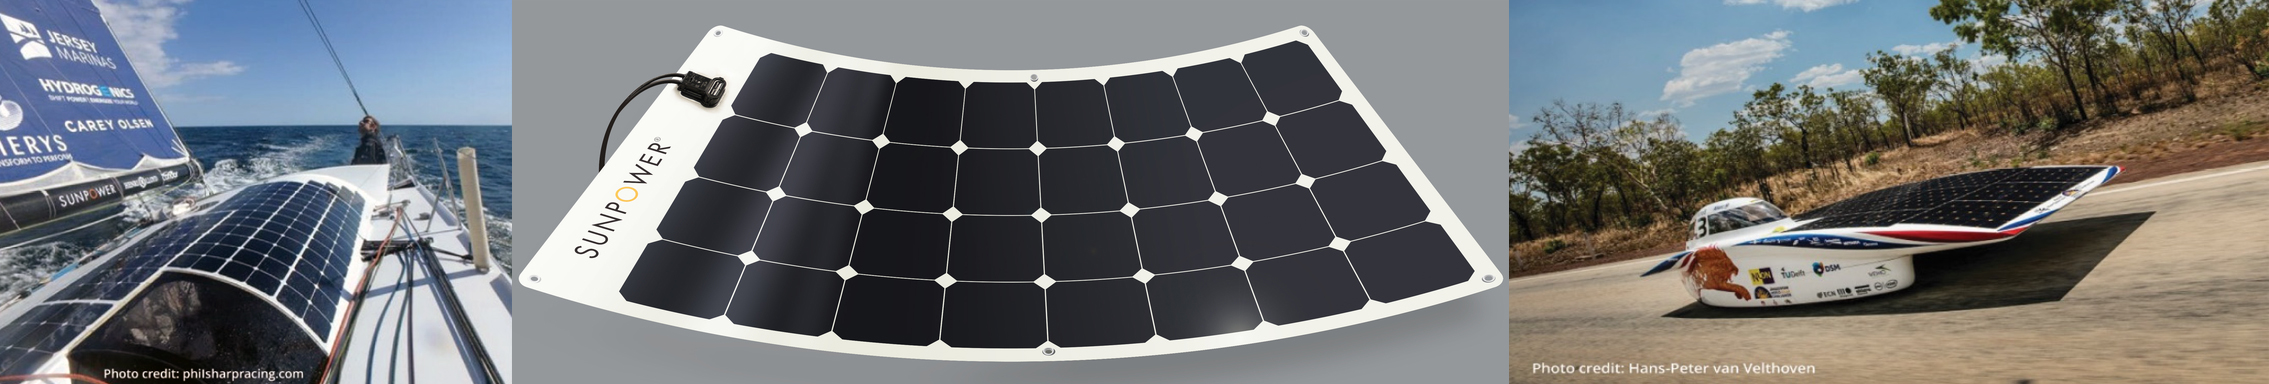 SunPower flexible solar panels